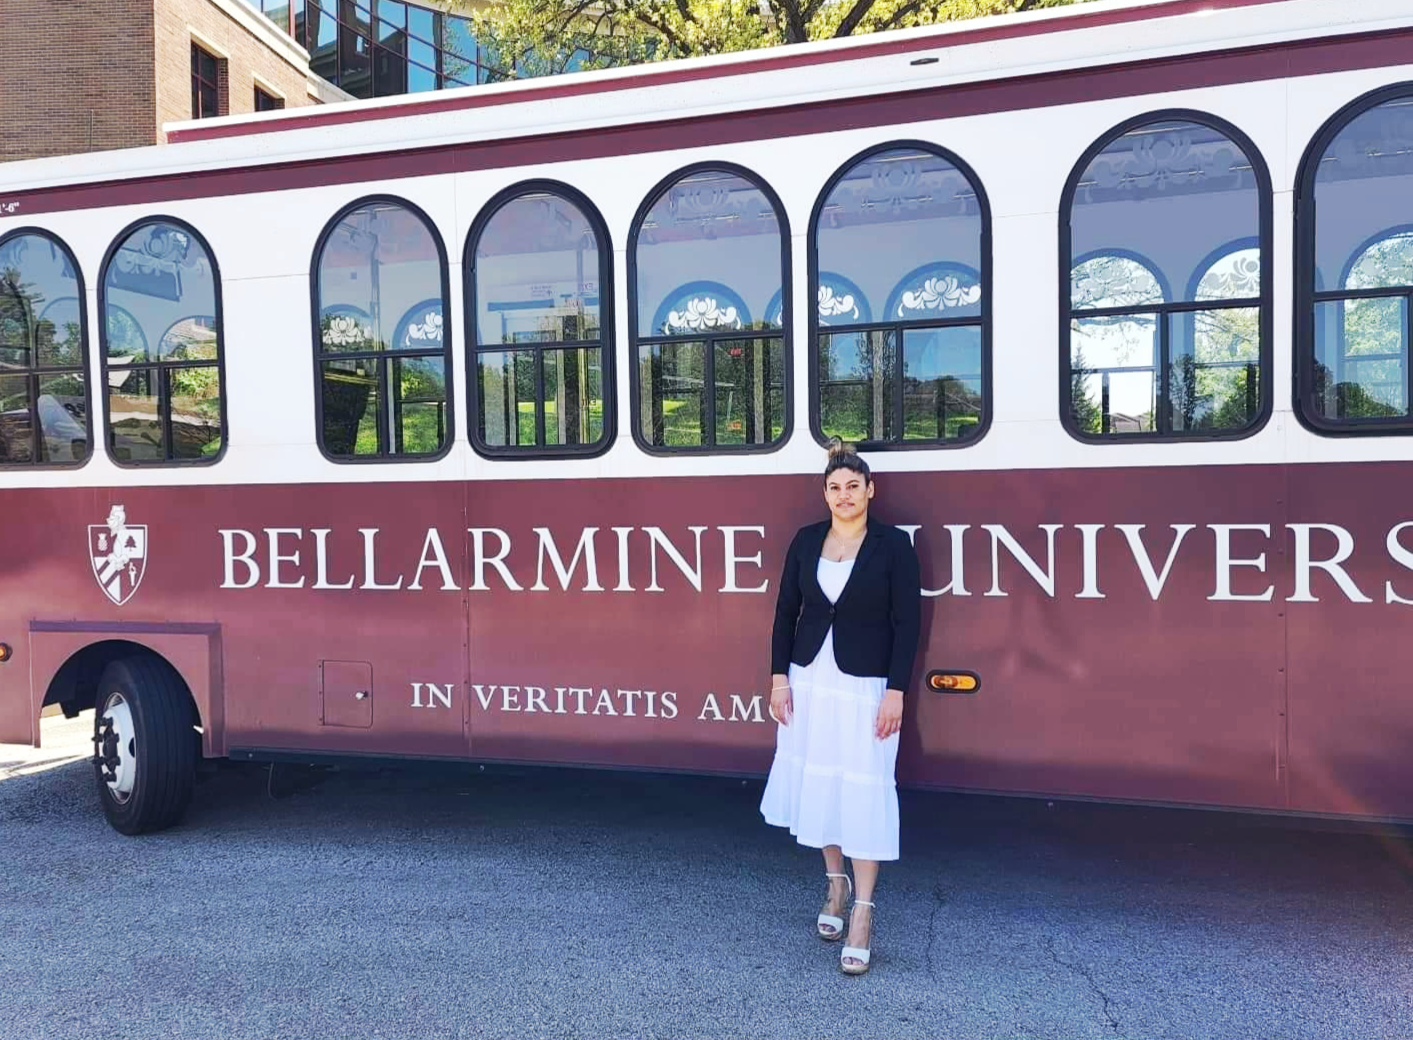 Maray Estacholi Veliz poses in front of the Bellarmine trolley